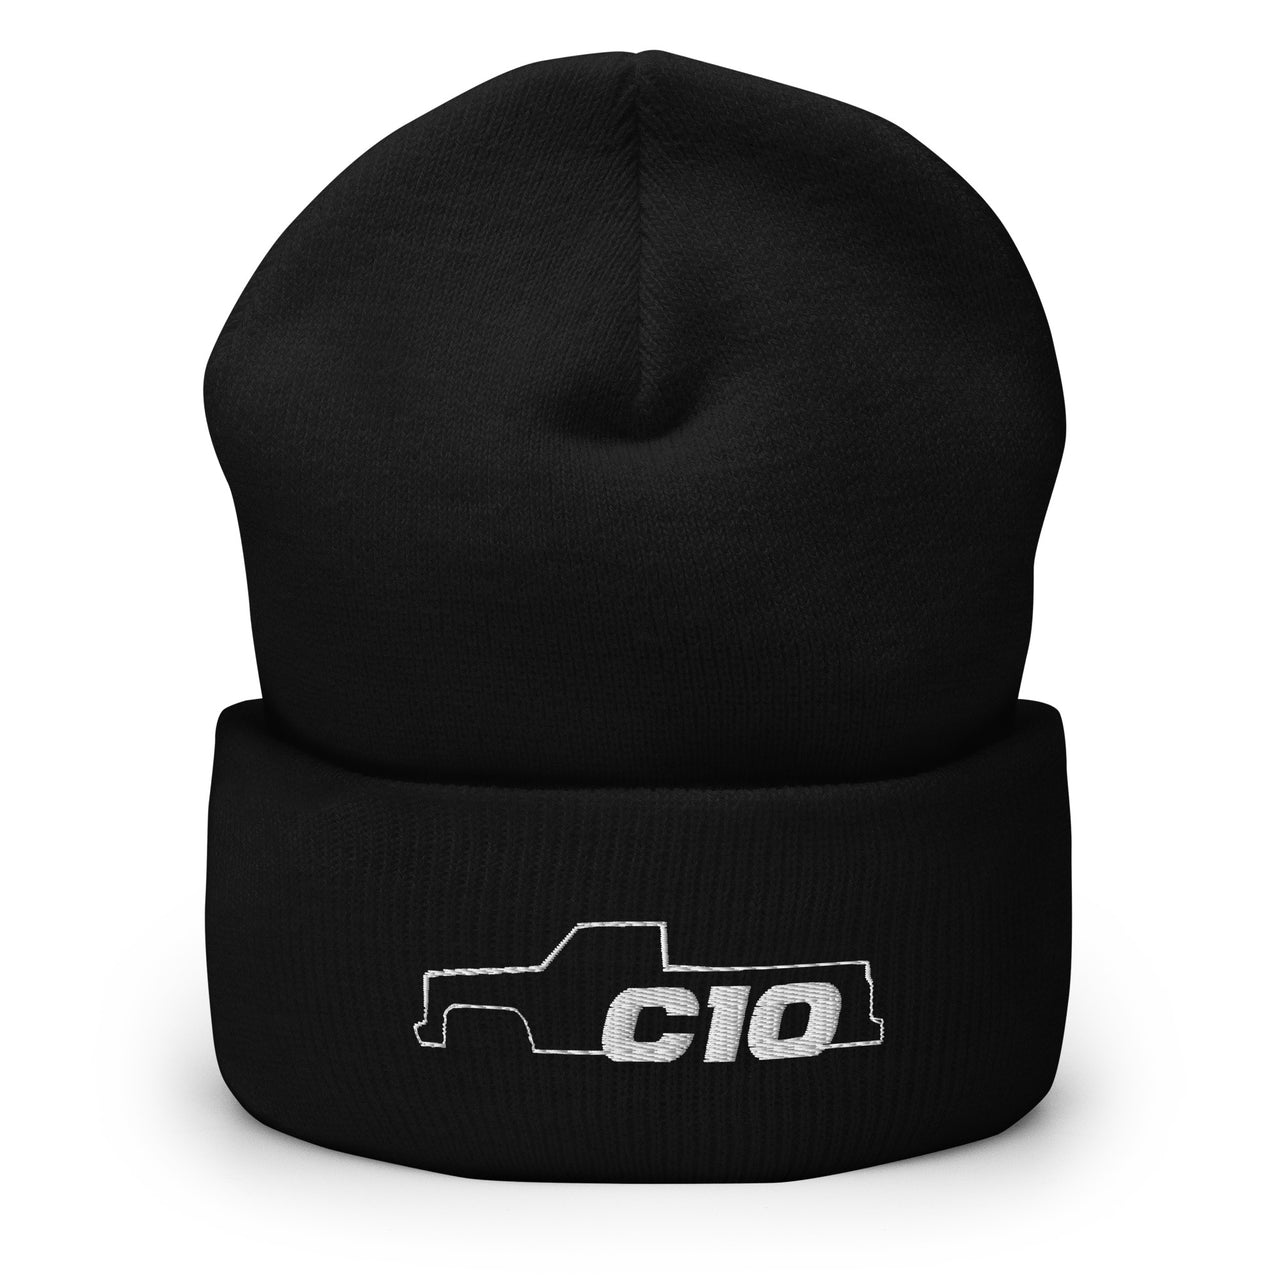 C10 Squarebody Square Body Winter Hat Cuffed Beanie in black